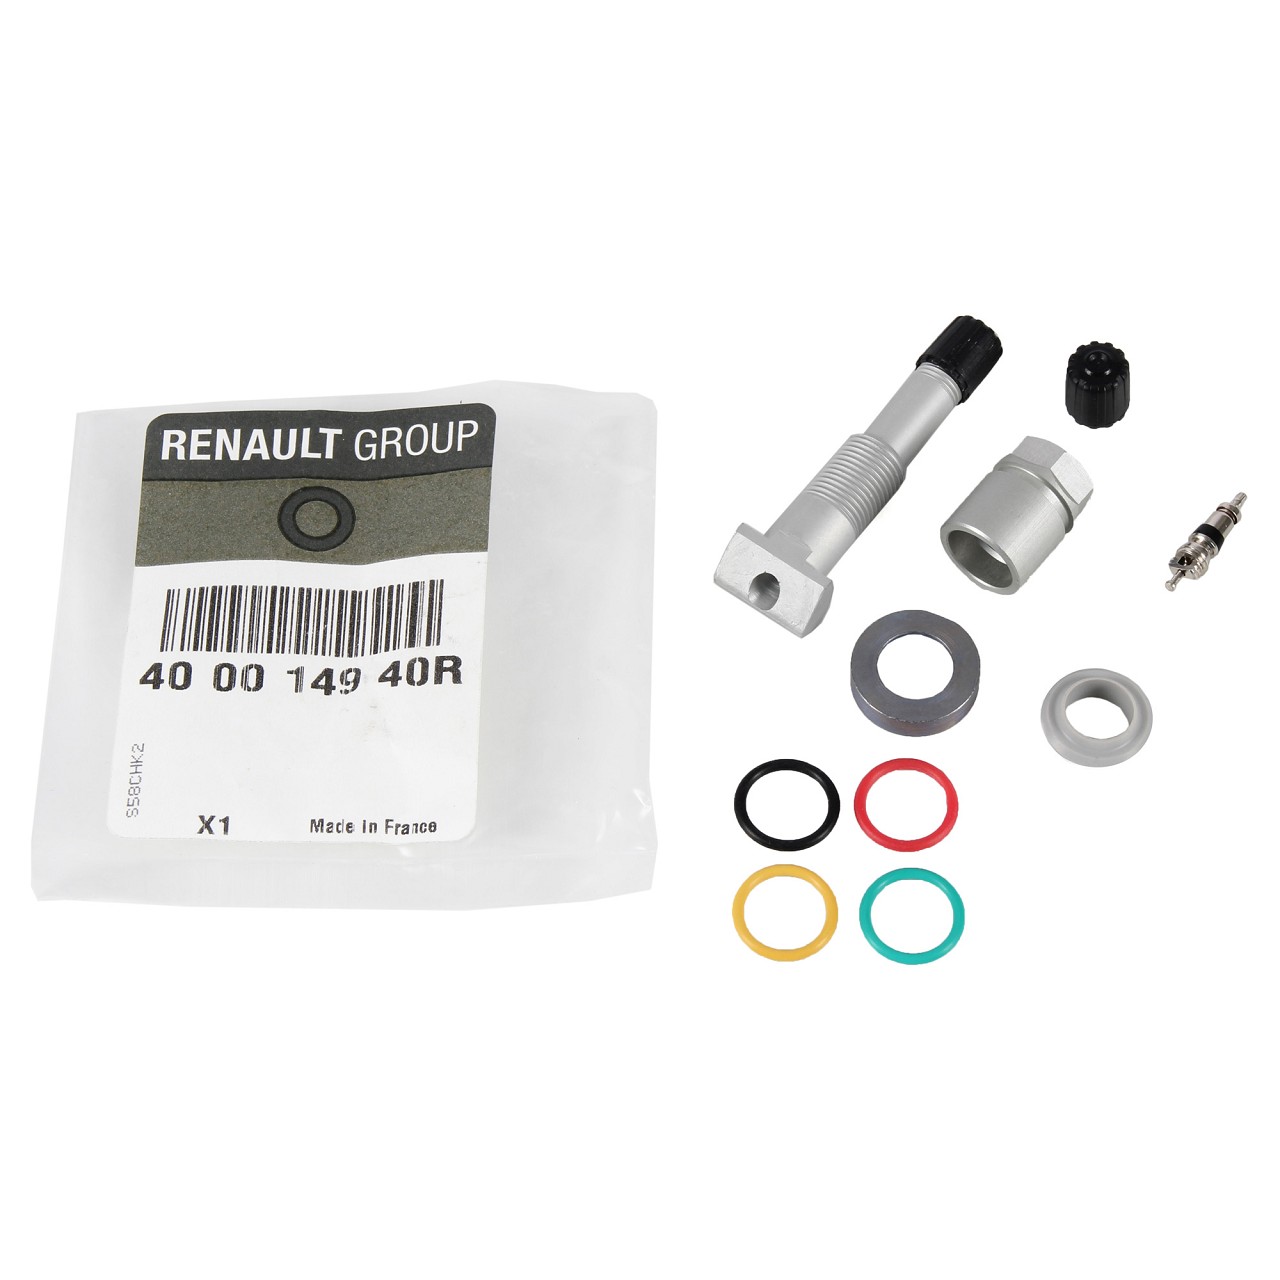 ORIGINAL Renault RDKS Reifendrucksensor Rep.-Satz MEGANE 3 4 SCENIC 3 400014940R